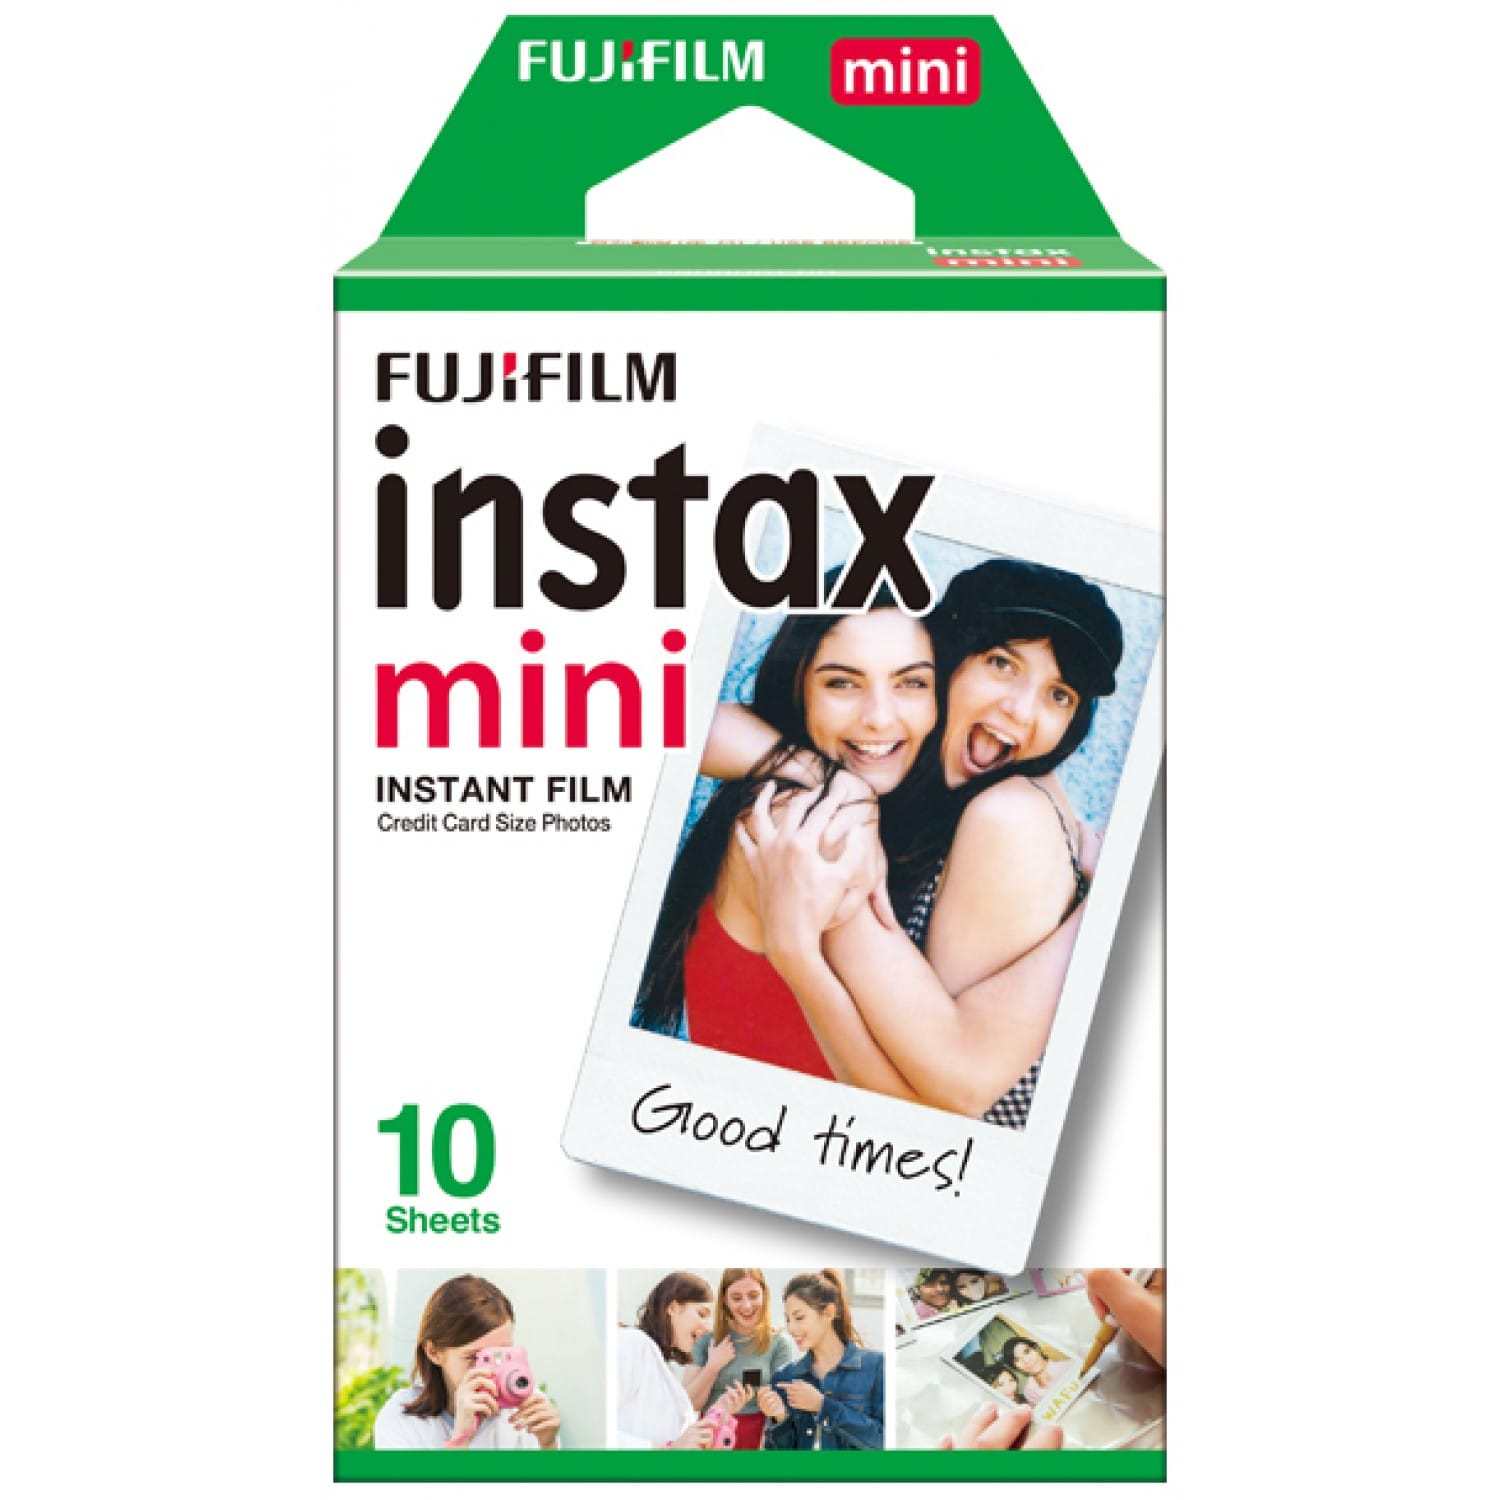 Appareil photo instantané Fujifilm Instax mini 9 rose corail